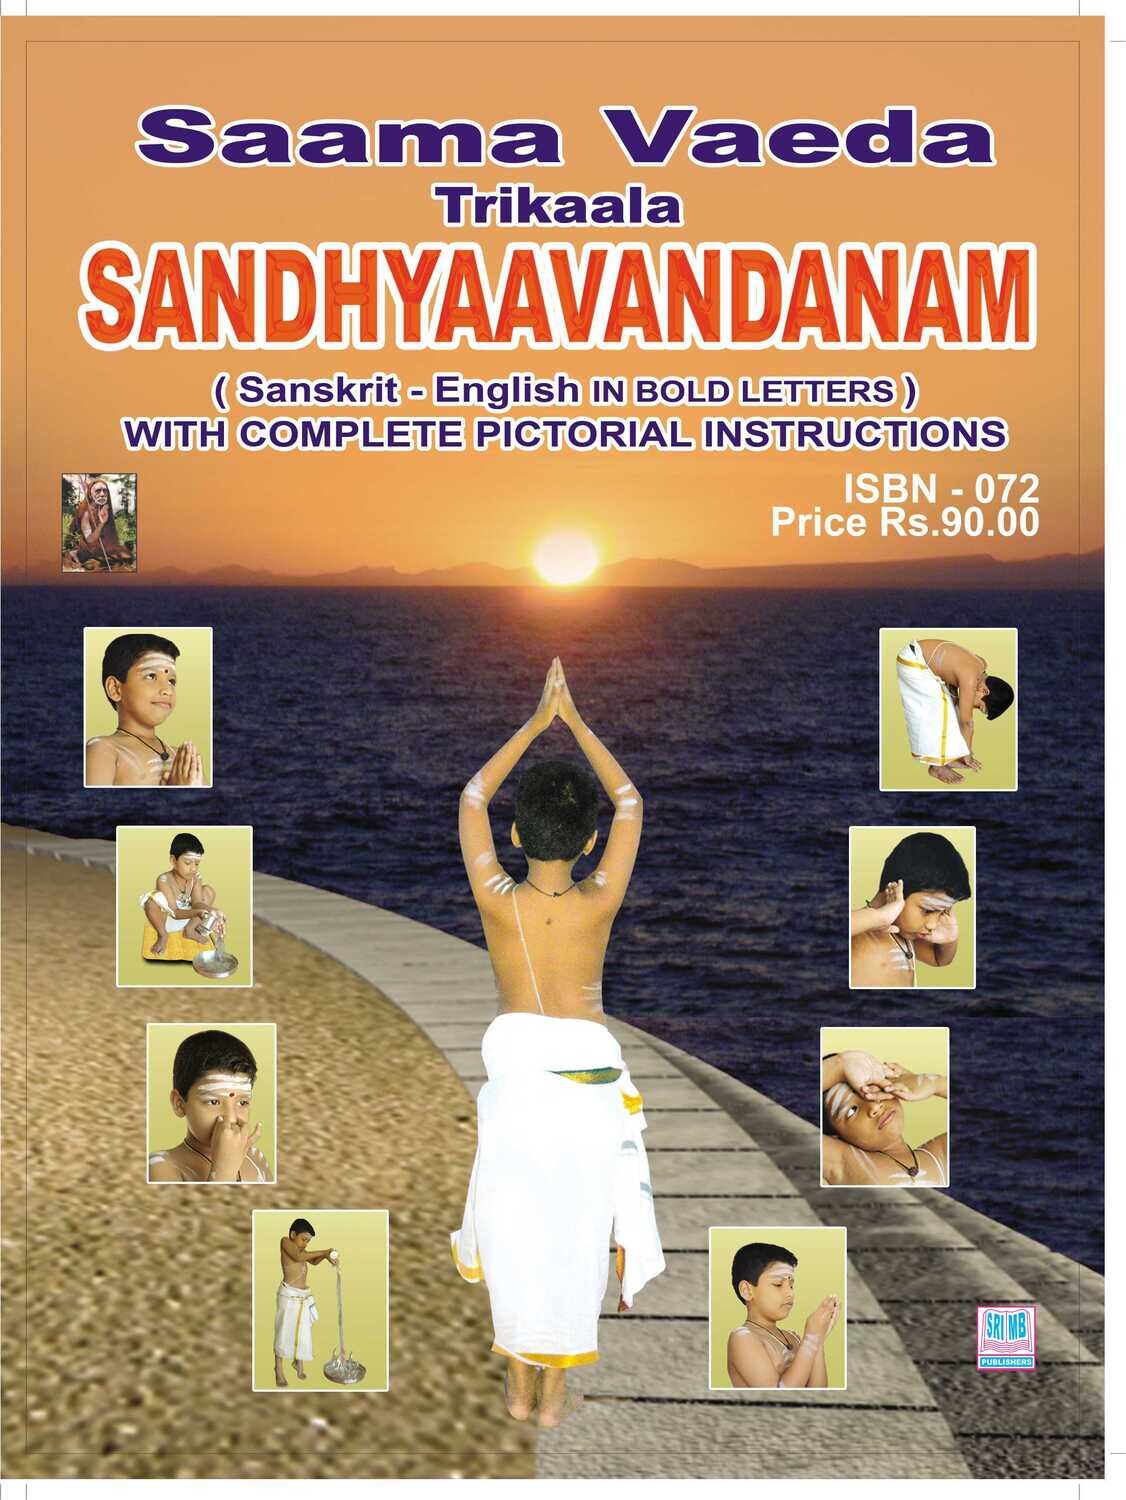 Saama Vaeda Sandhyaavandanam     (Sanskrit-English with pictorial instructions )